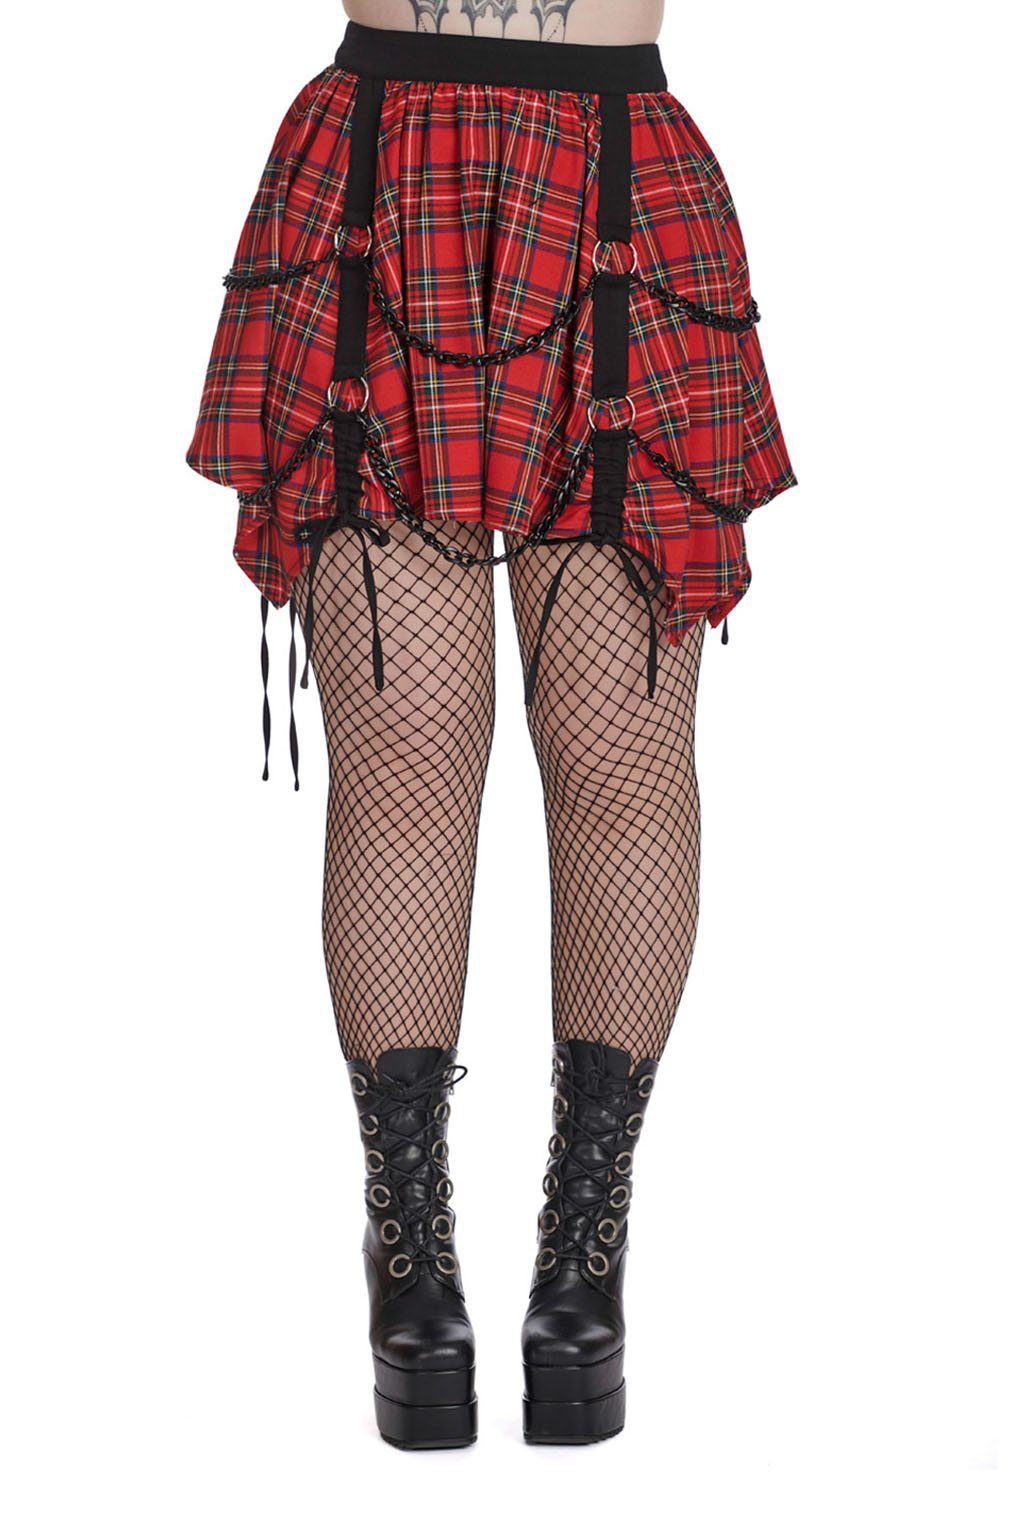 Banned A-Linien-Rock DIY Disturbance Tartan Punk Ketten Gothic Chain Skirt